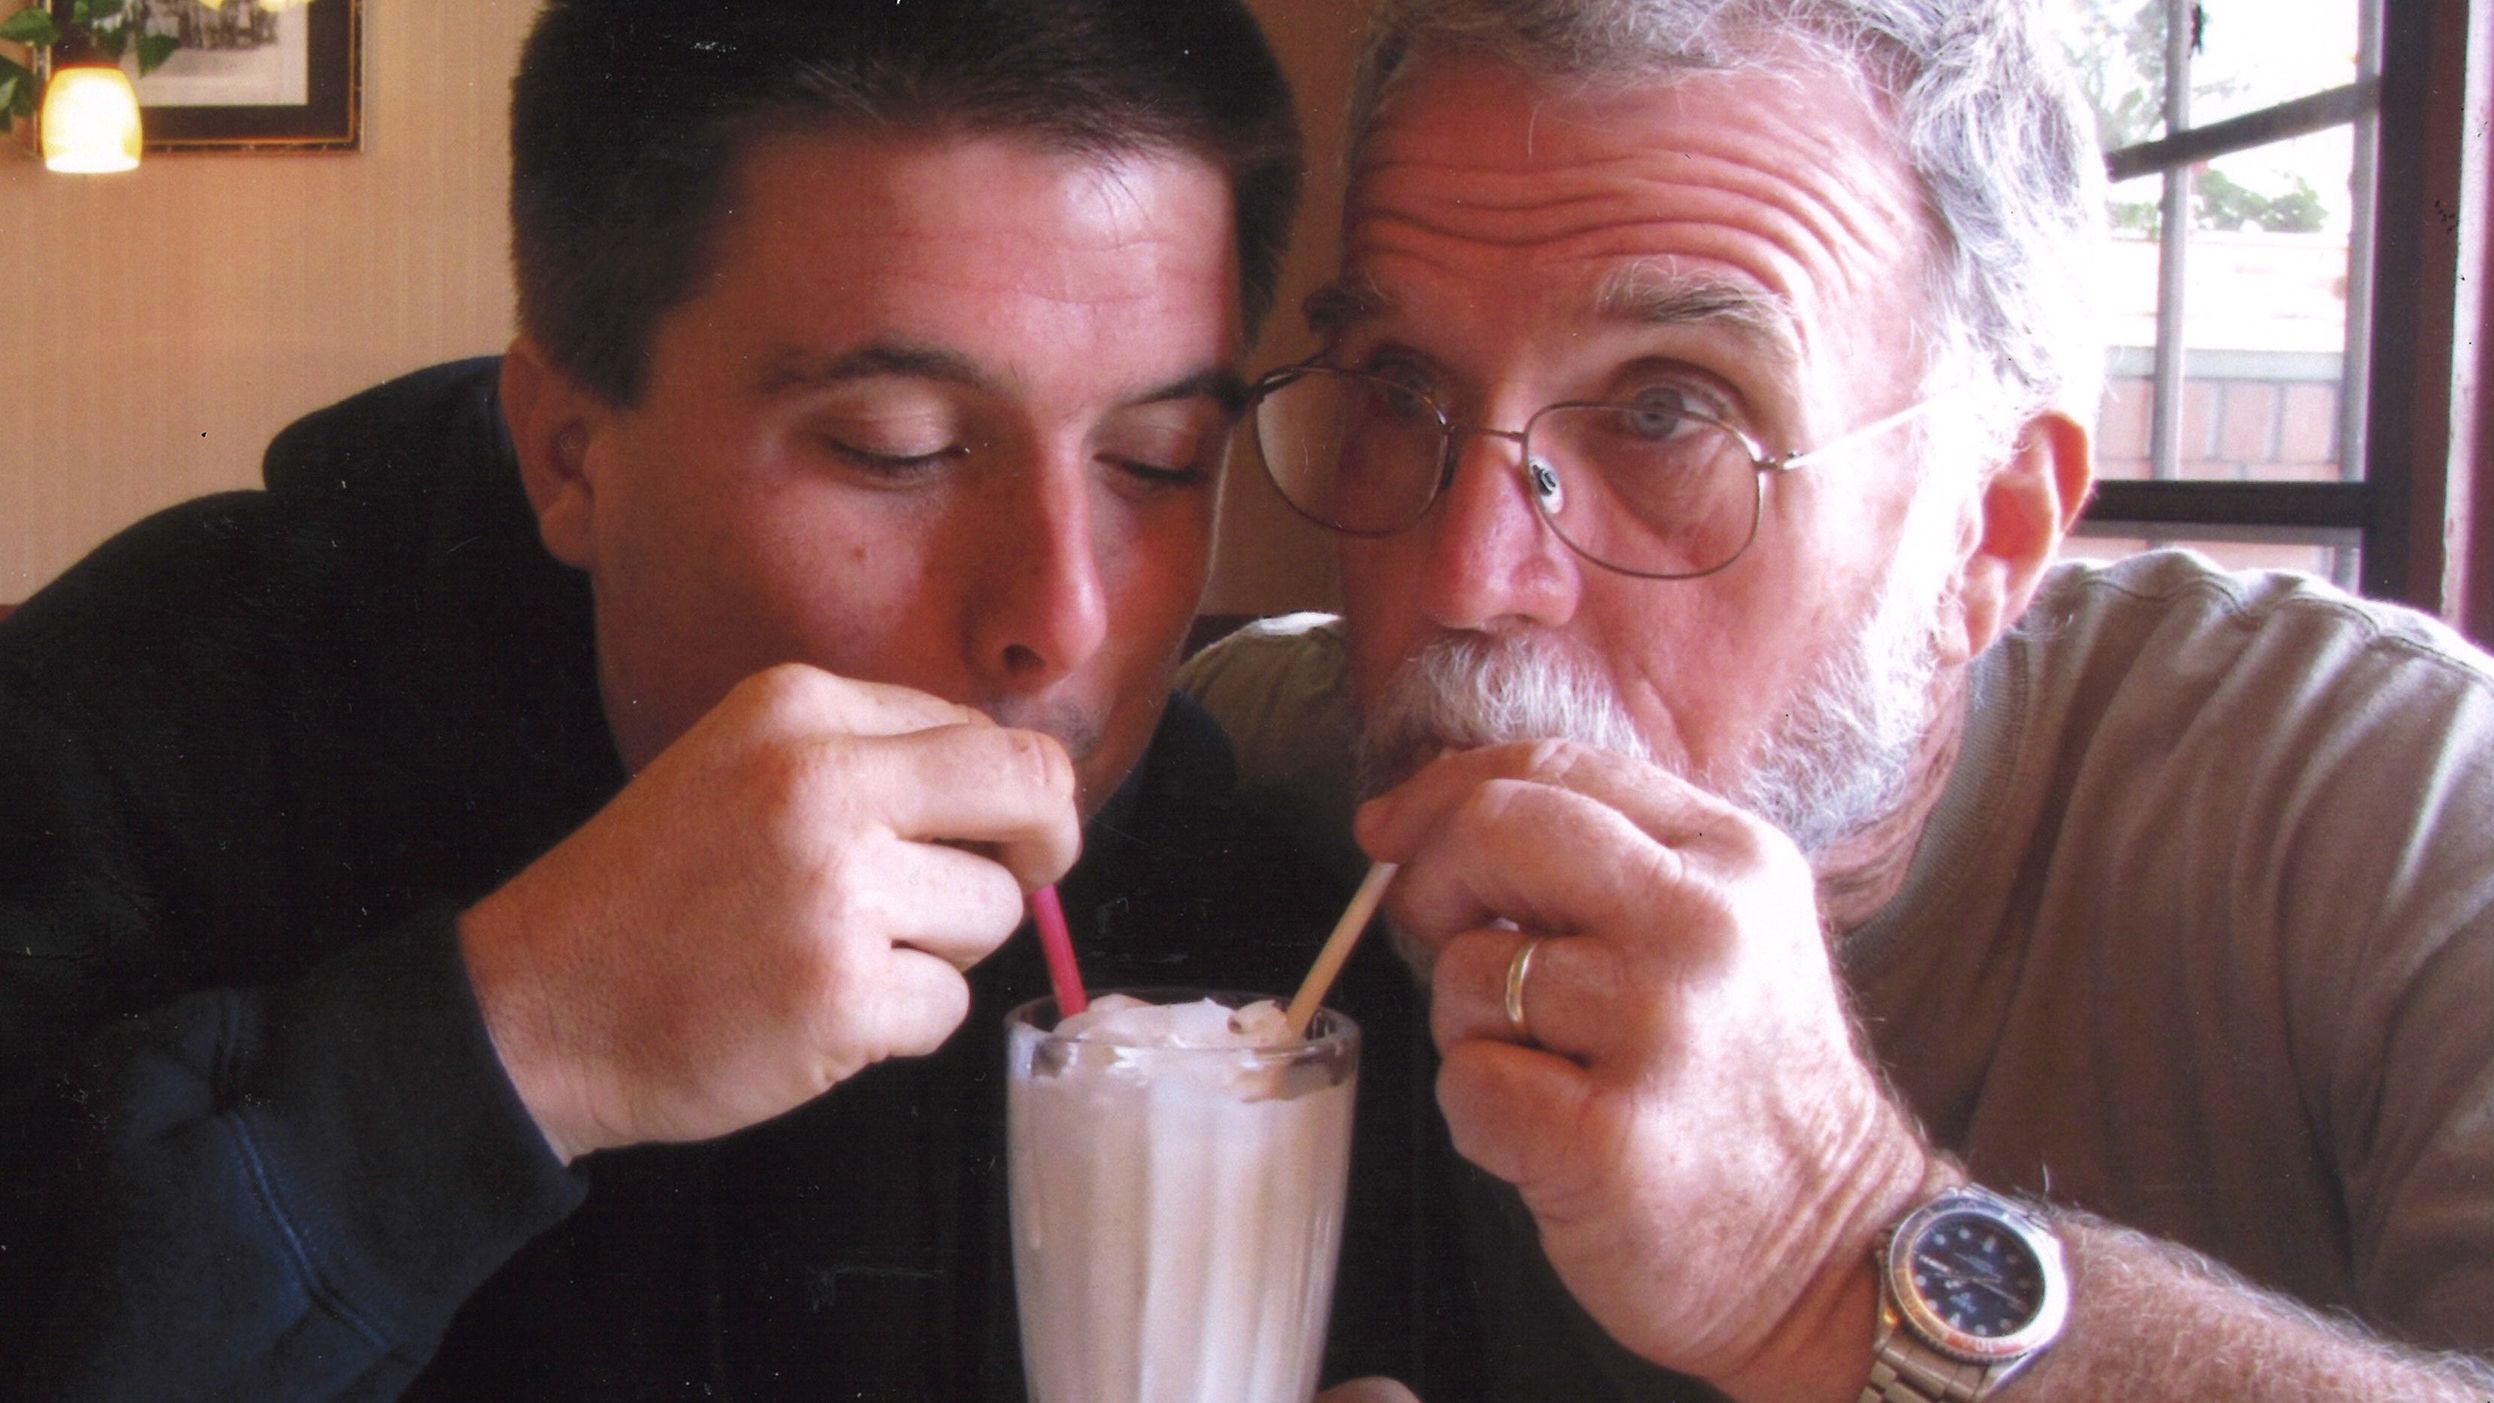 Sean and Pat share a milkshake in 2015.